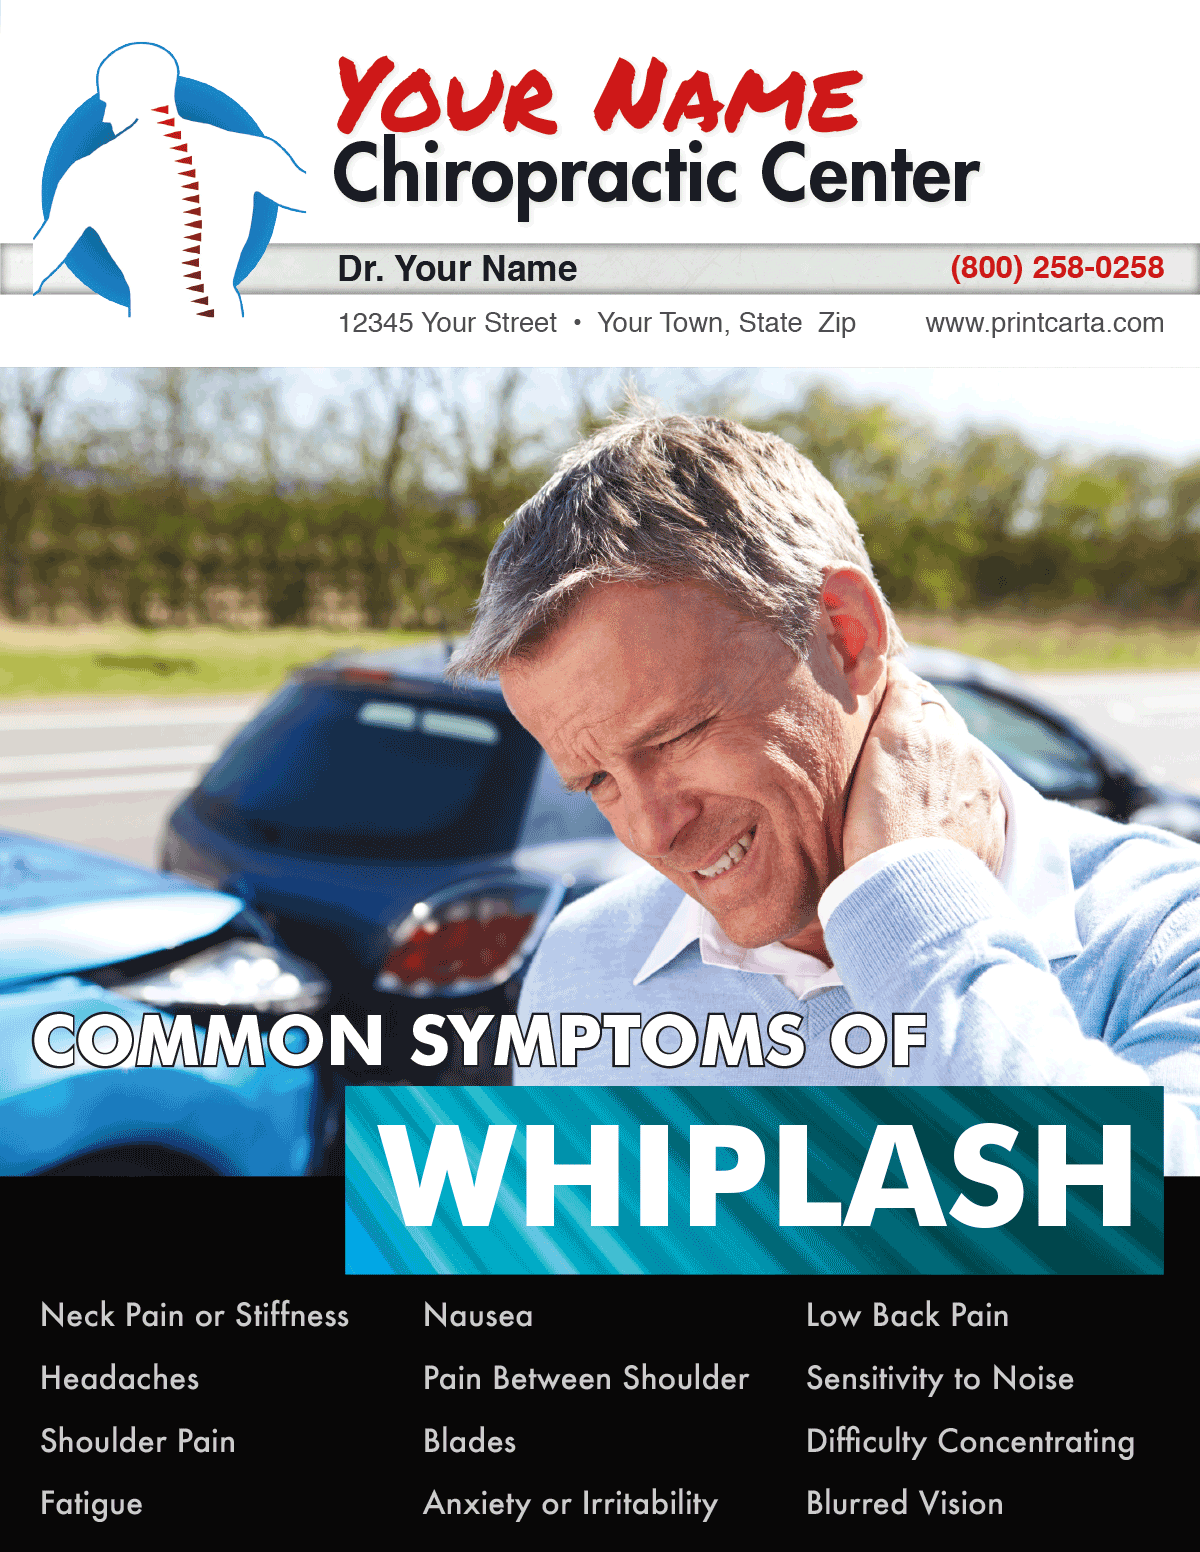 Common Symptoms of Whiplash